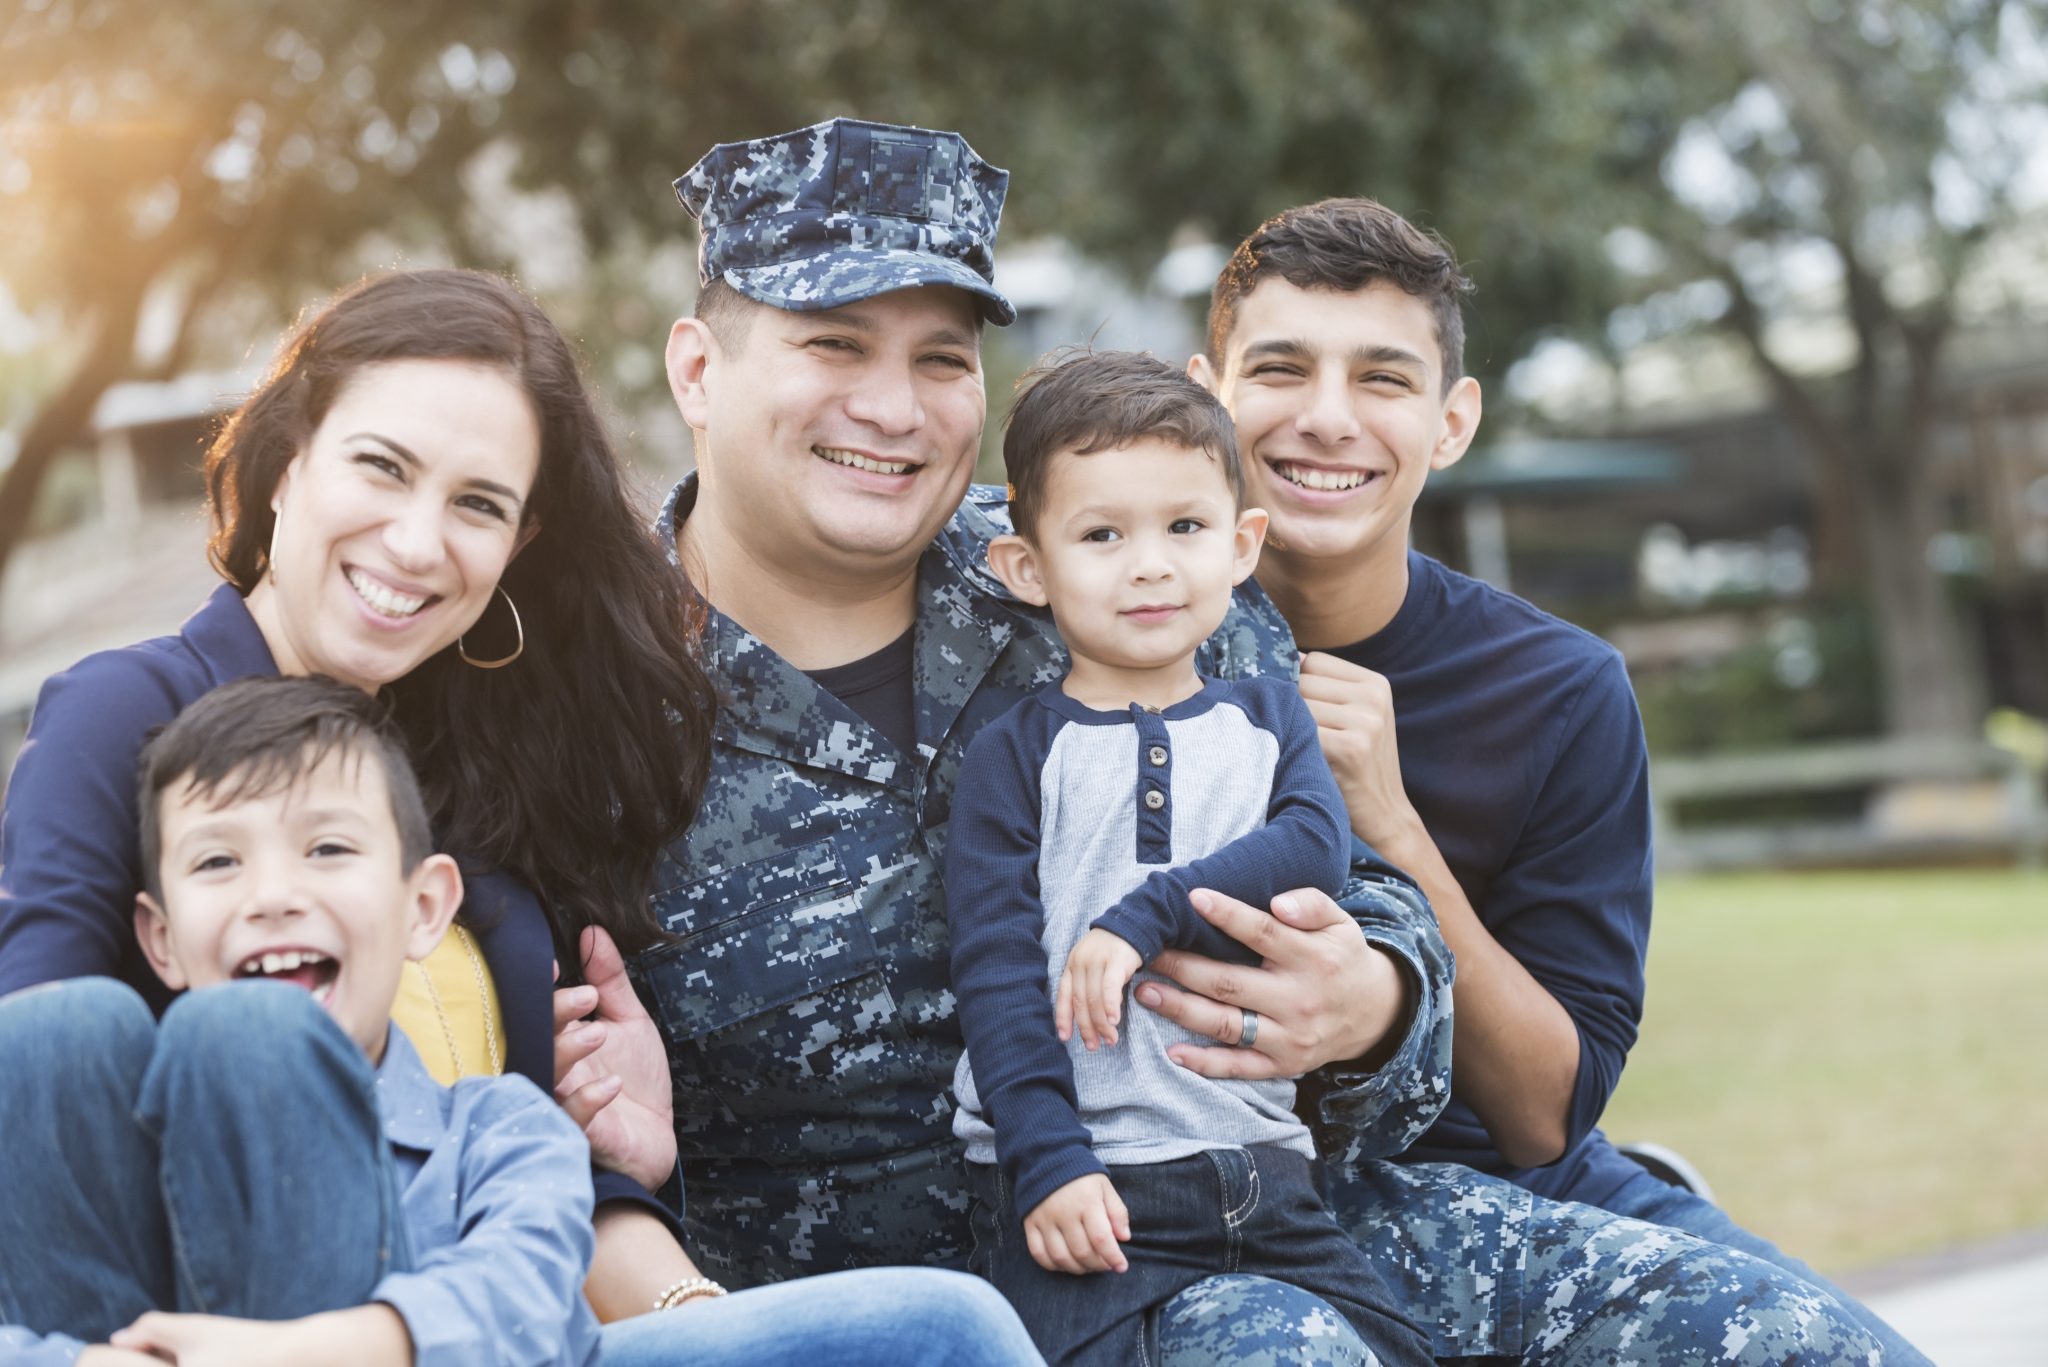 Hispanic military man with his family